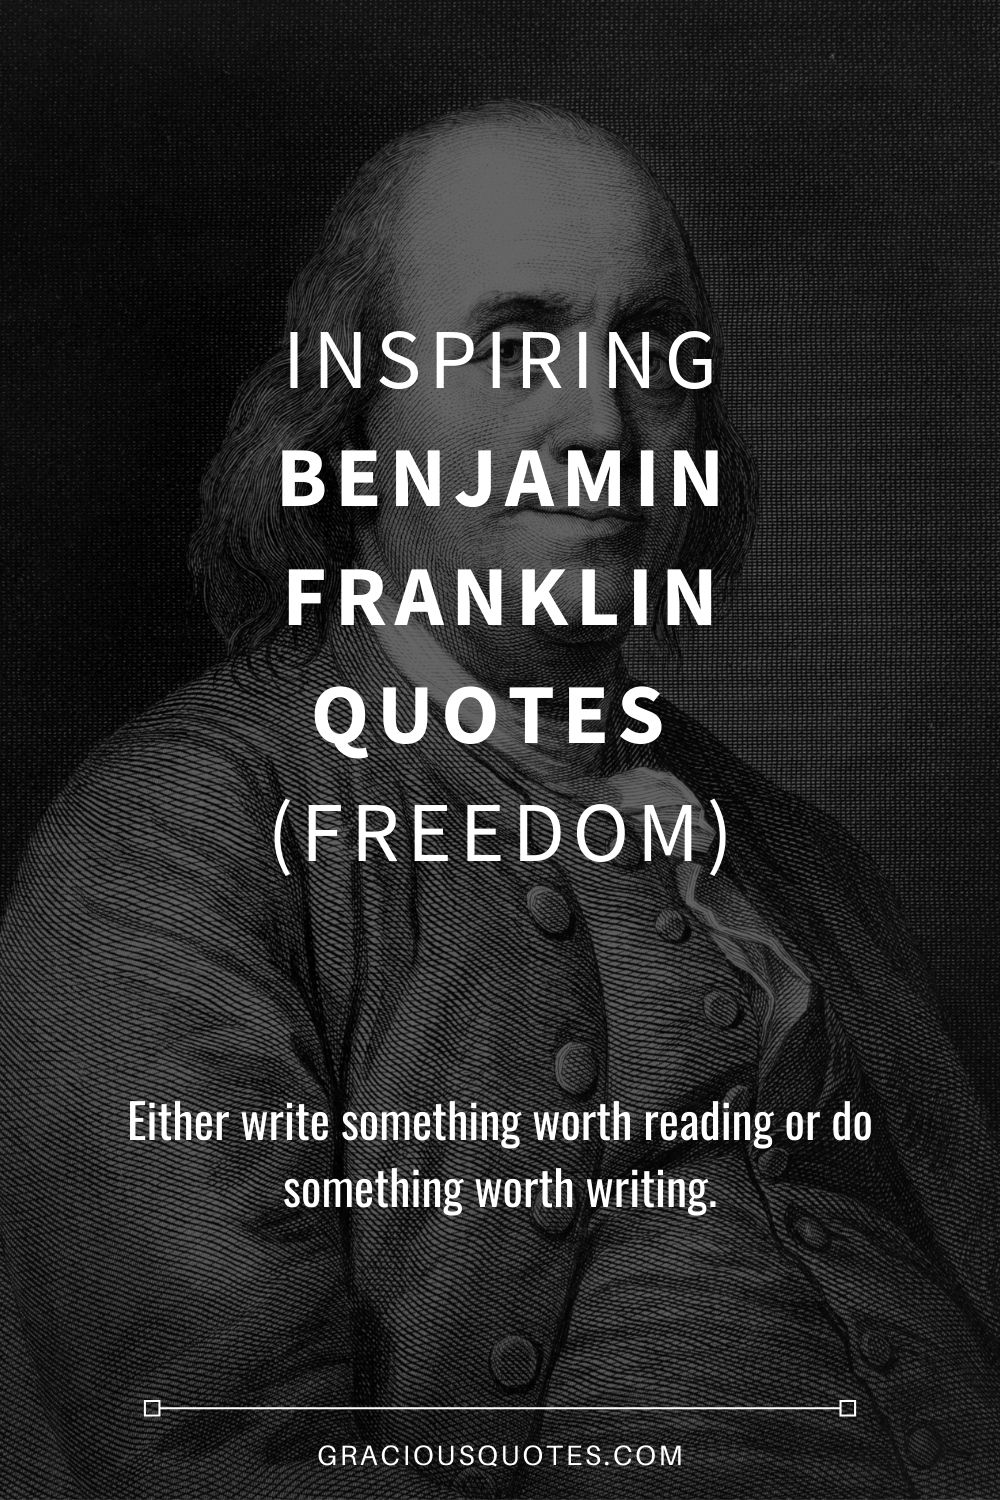 INSPIRING Benjamin Franklin Quotes (FREEDOM) - Gracious Quotes